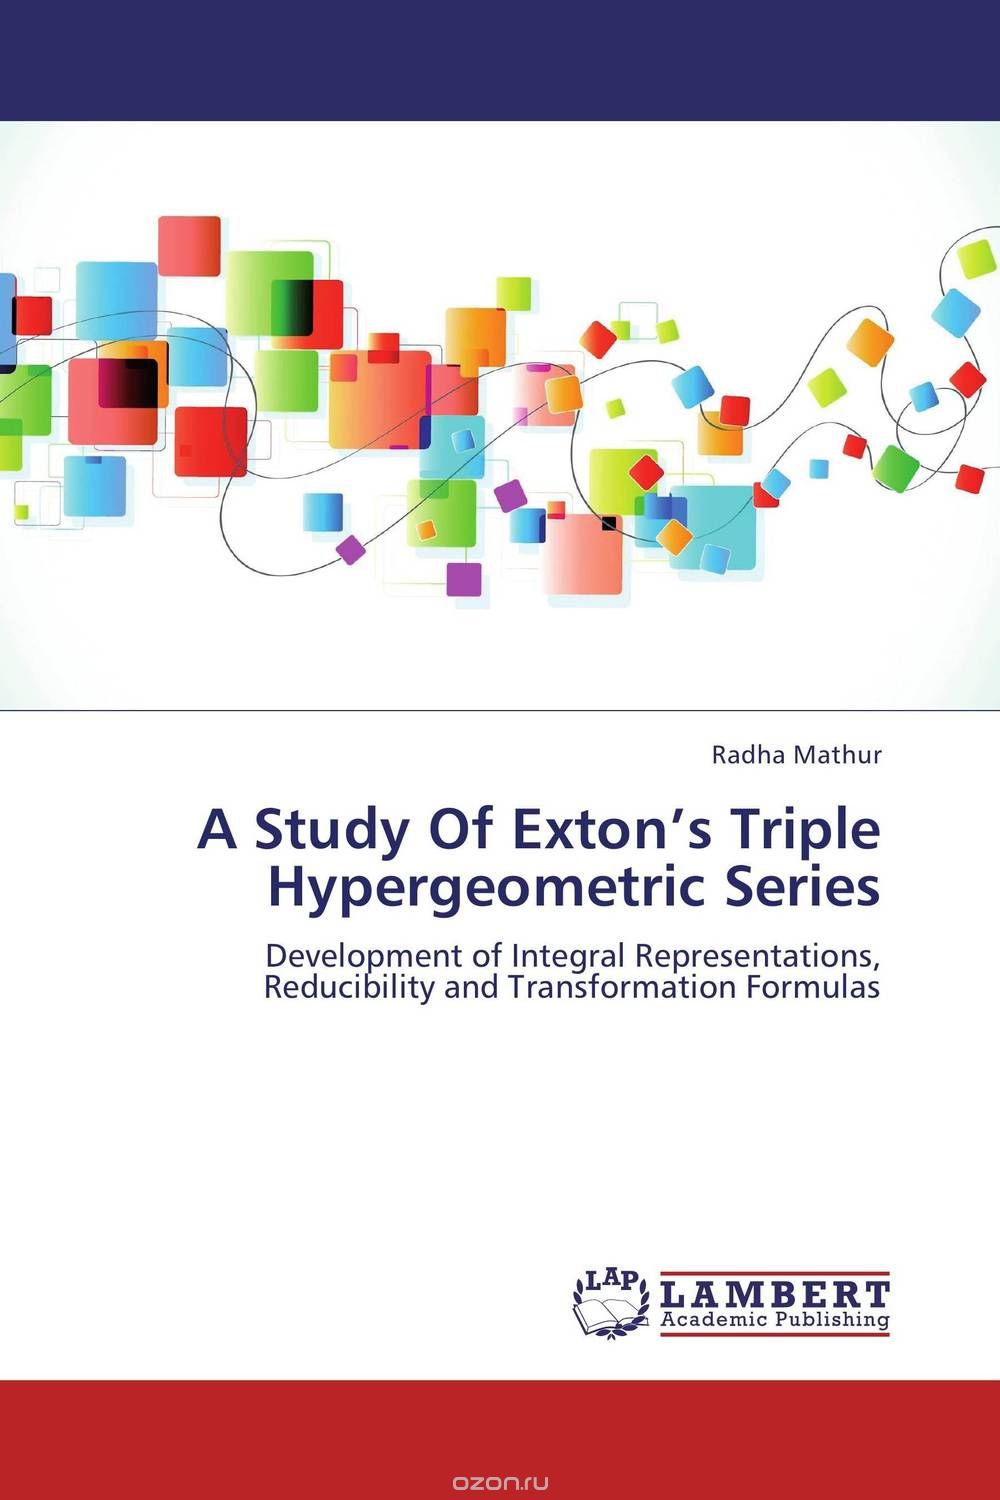 A Study Of Exton’s Triple Hypergeometric Series